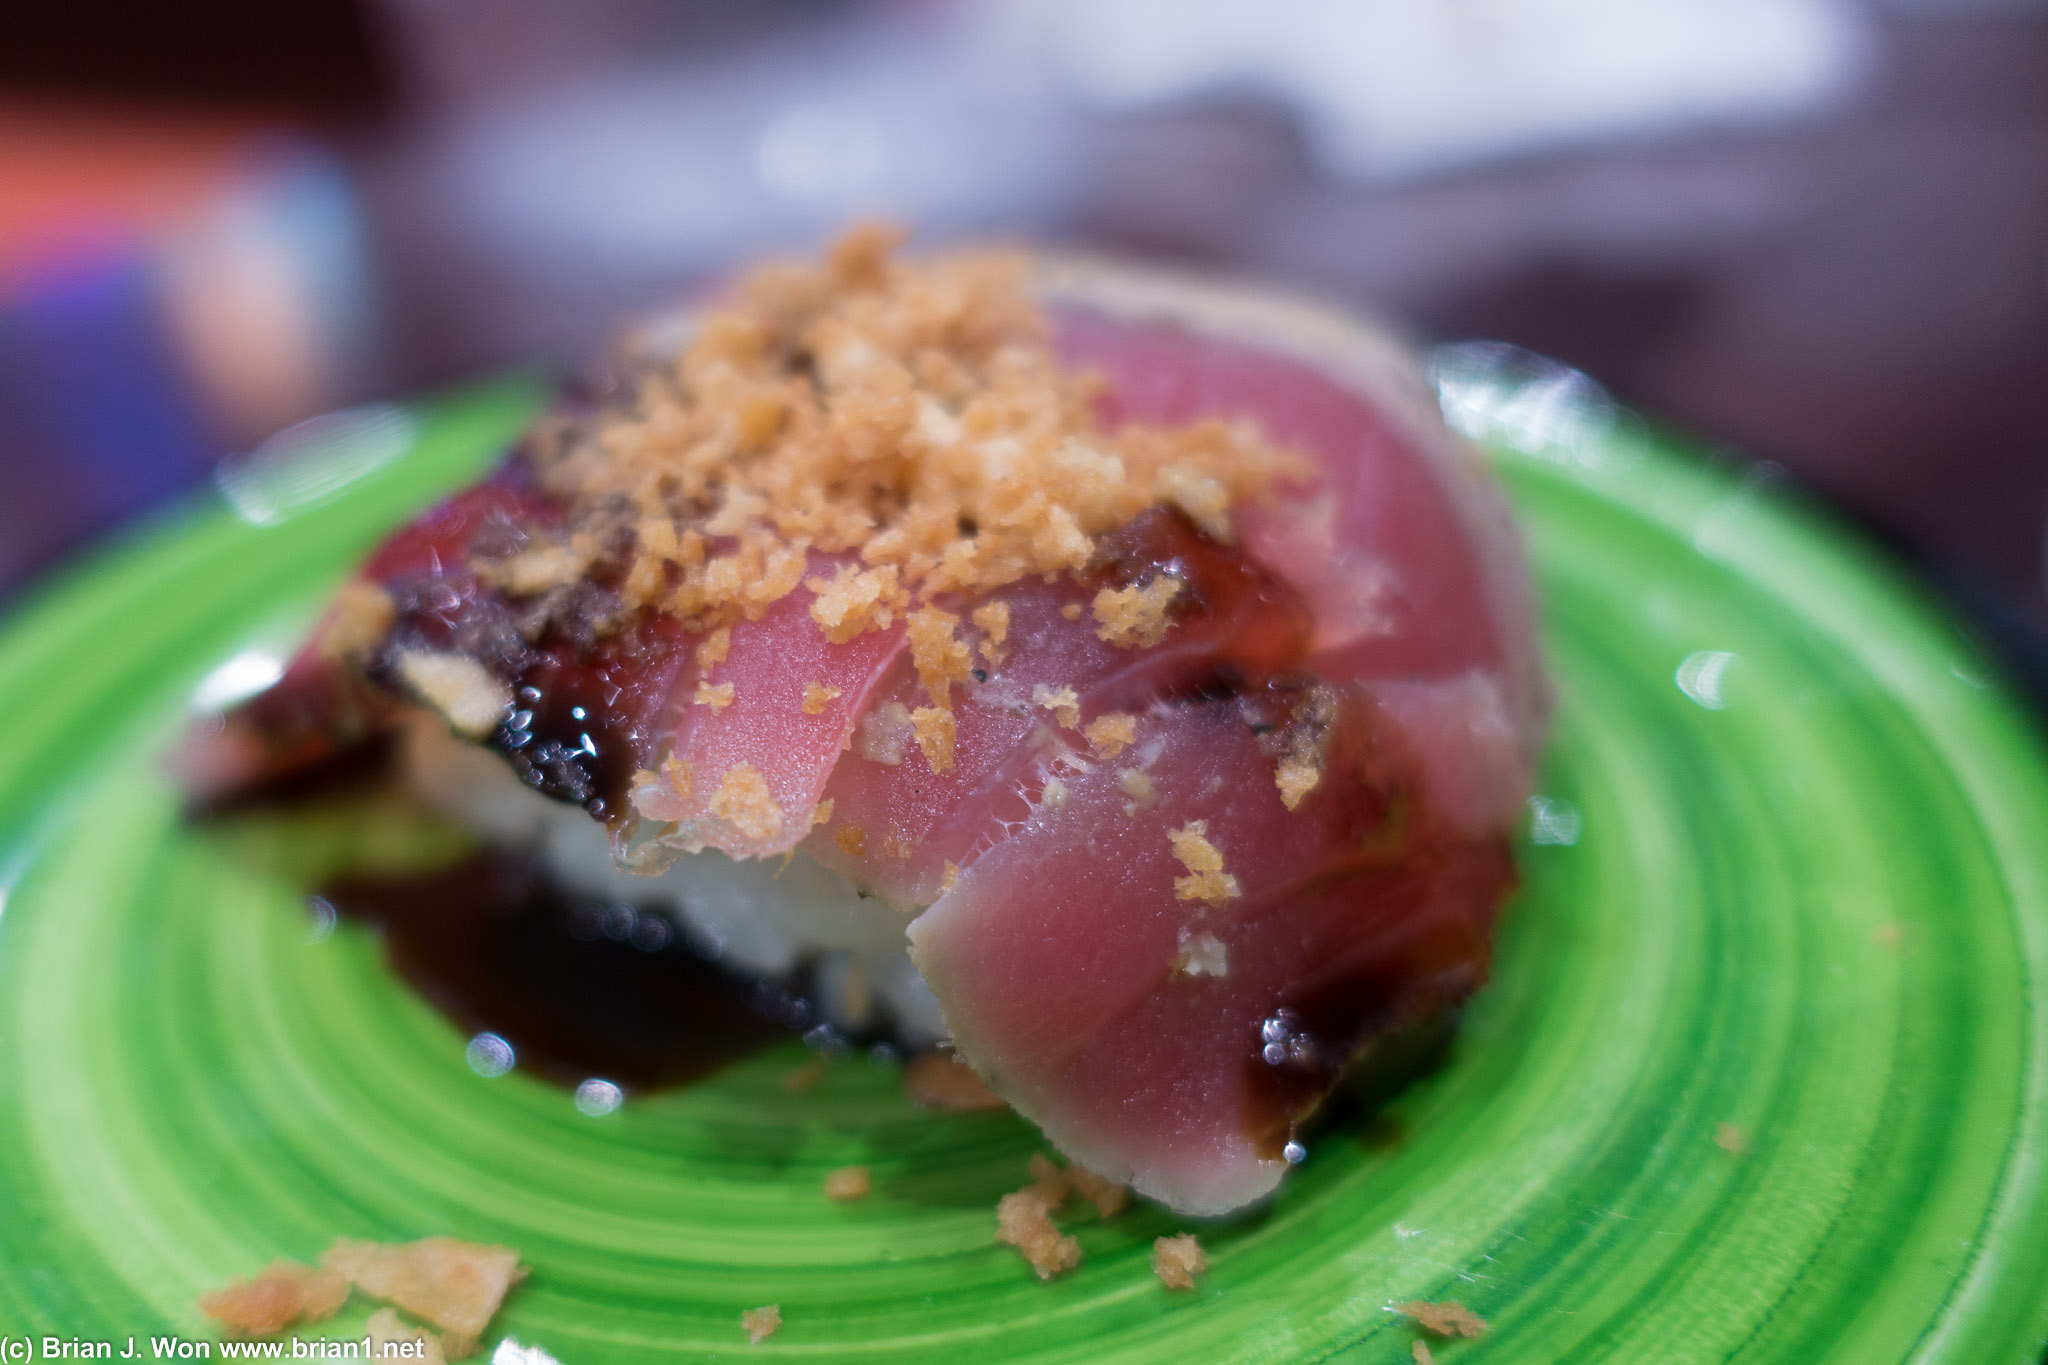 Garlic seared tuna. Nice way to mix it up.